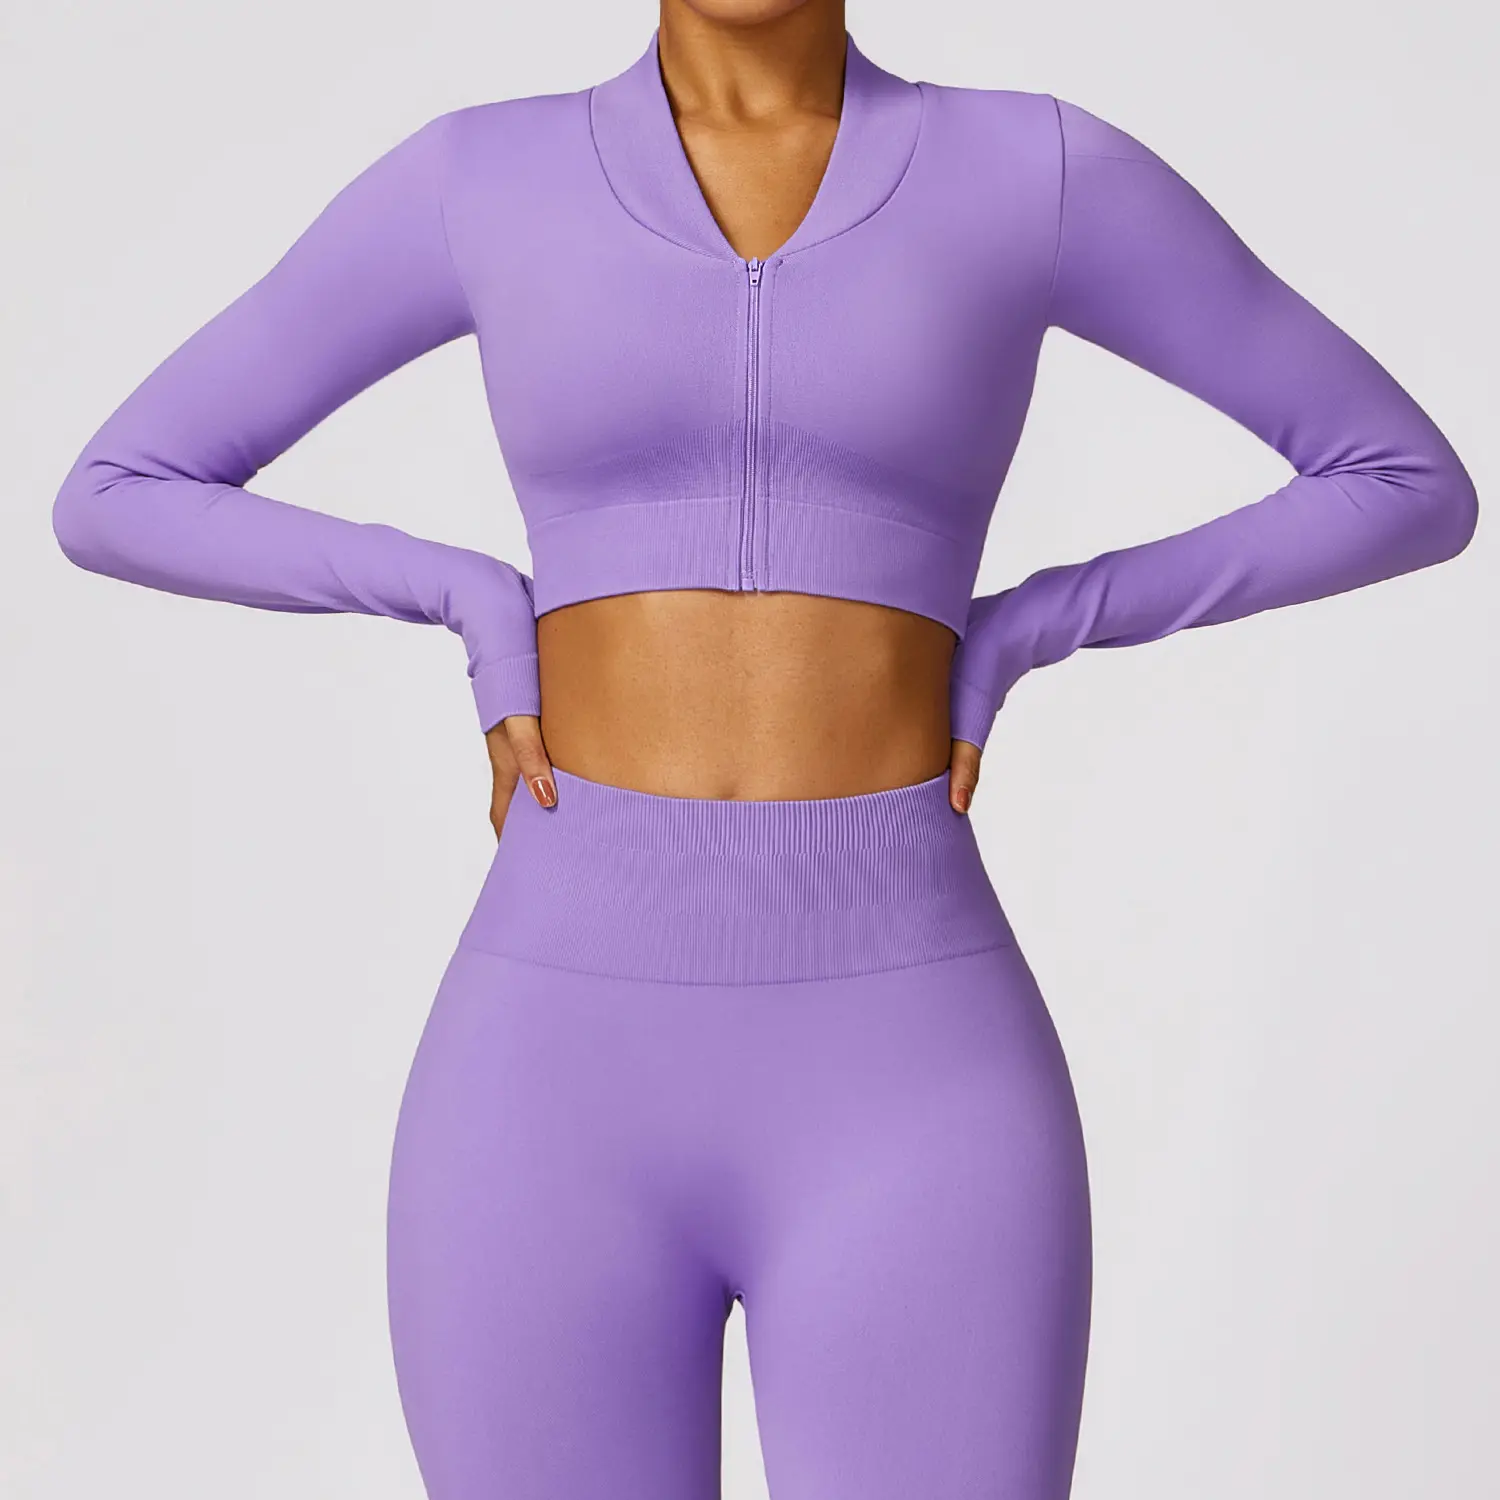 Paduxi Hoge Kwaliteit Yoga Set Sportkleding Fitness Outfit Vrouwen Sets Naadloze Gym Kleding Voor Vrouwen Workout Actieve Kleding